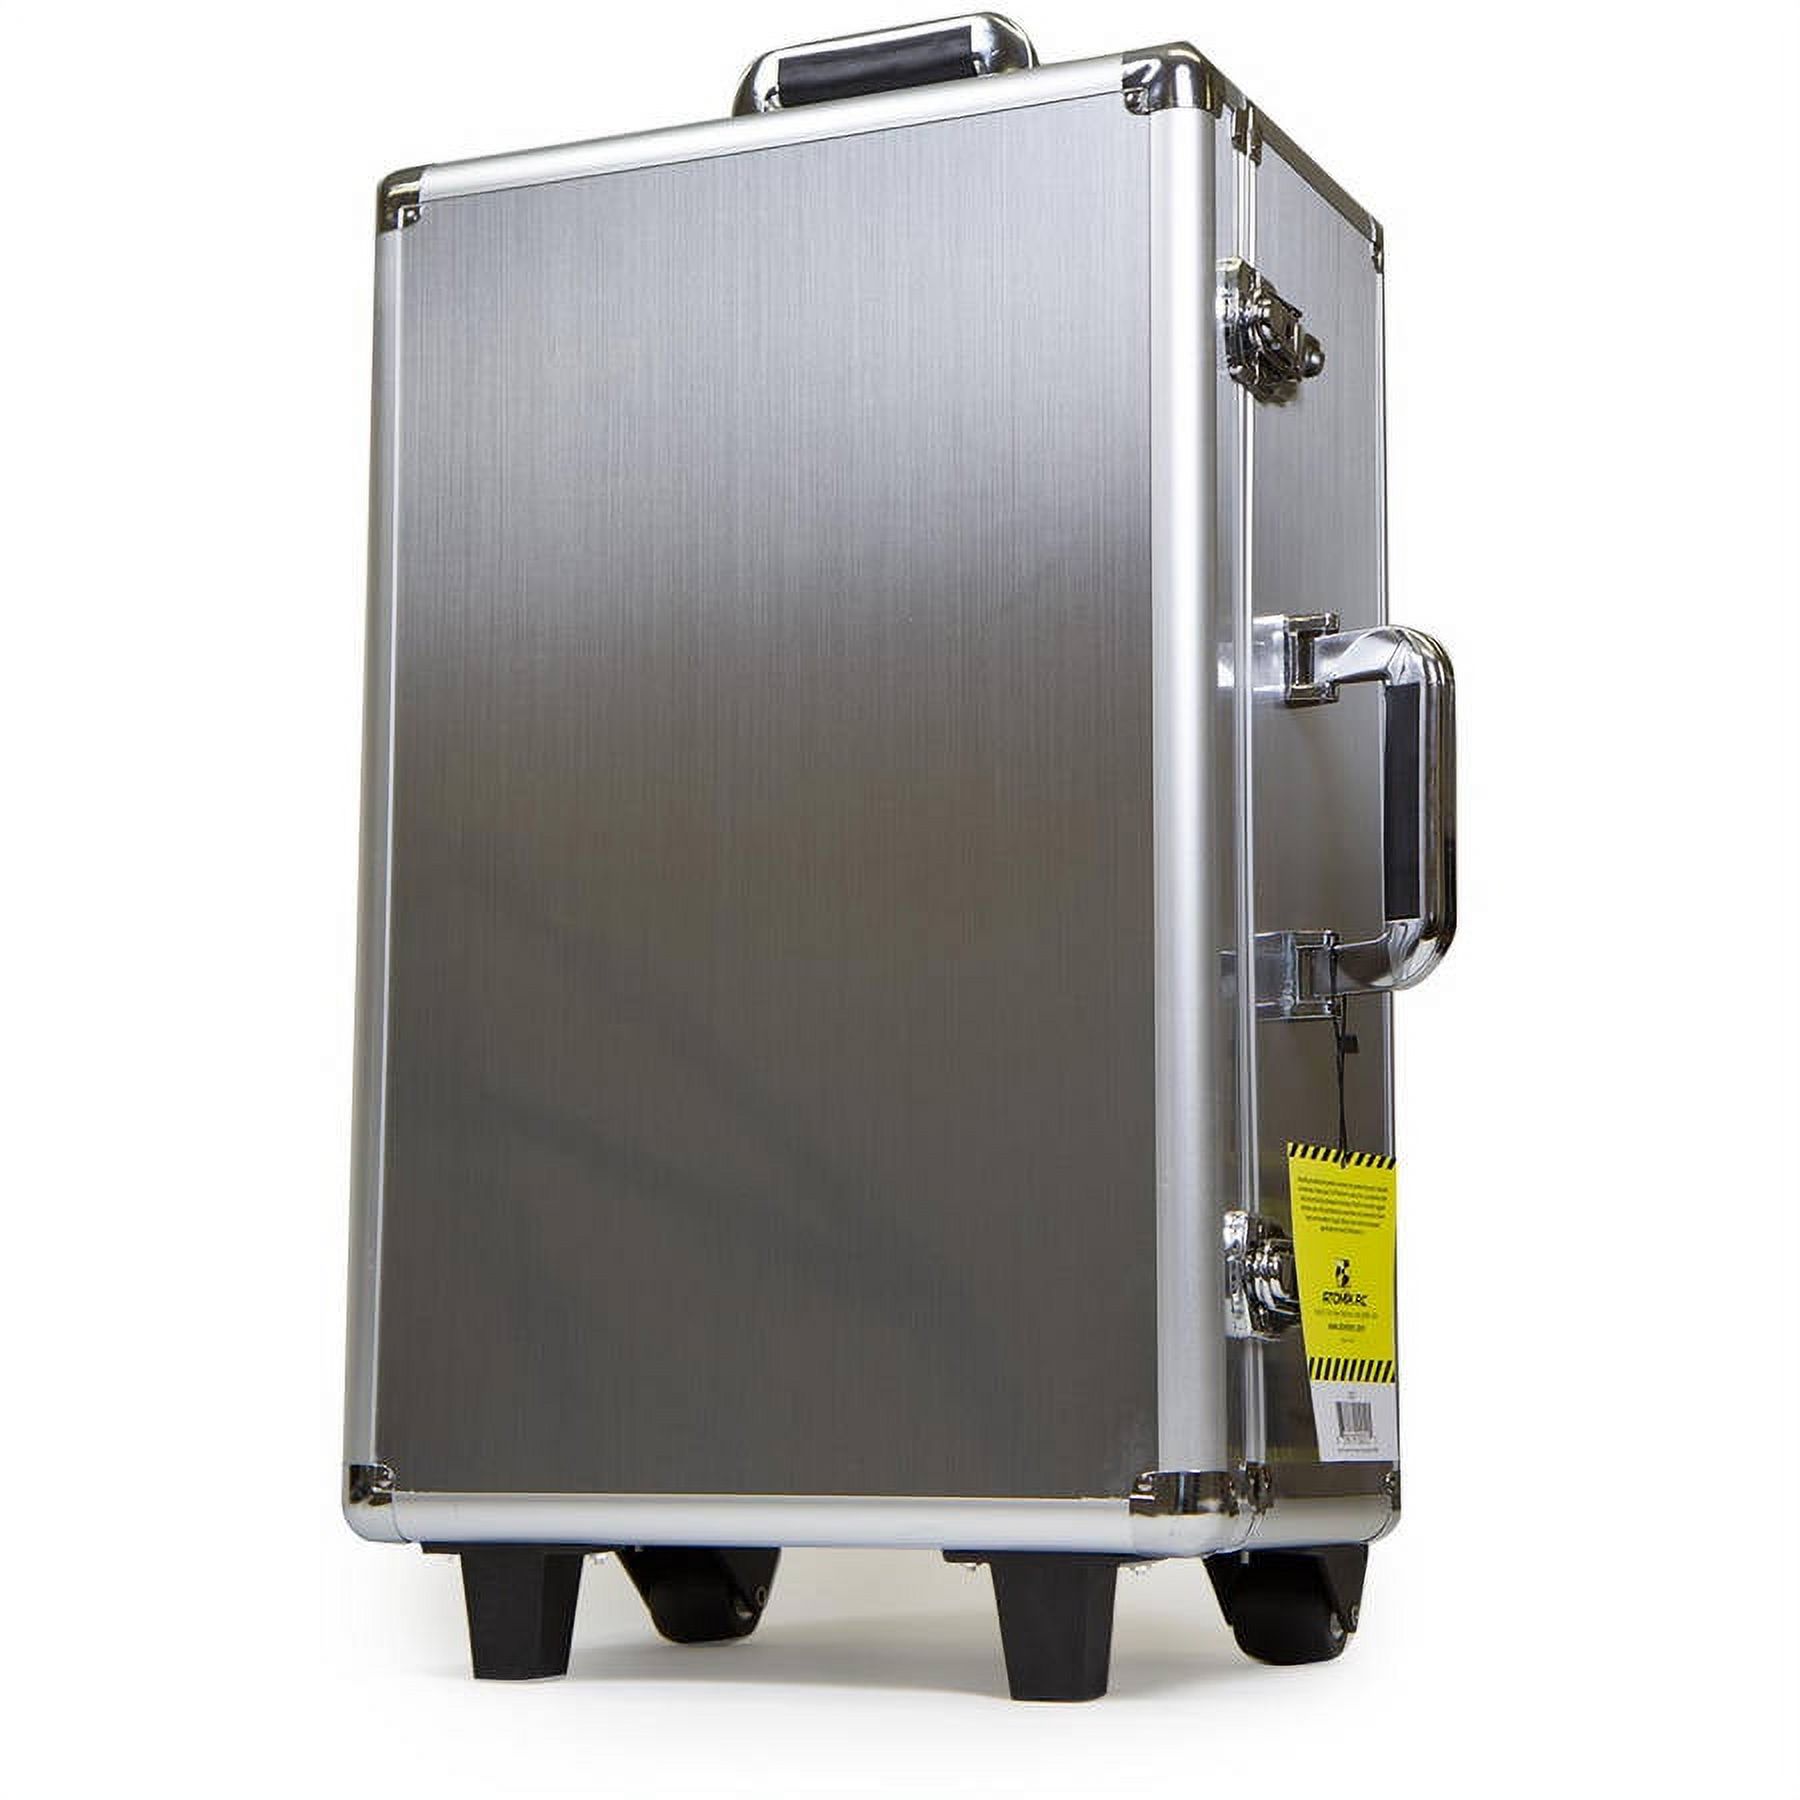 Atomik RC DJI Phantom 3 Professional Advanced RC Alloy Rolling Travel Hard Box Carry Case - image 5 of 6